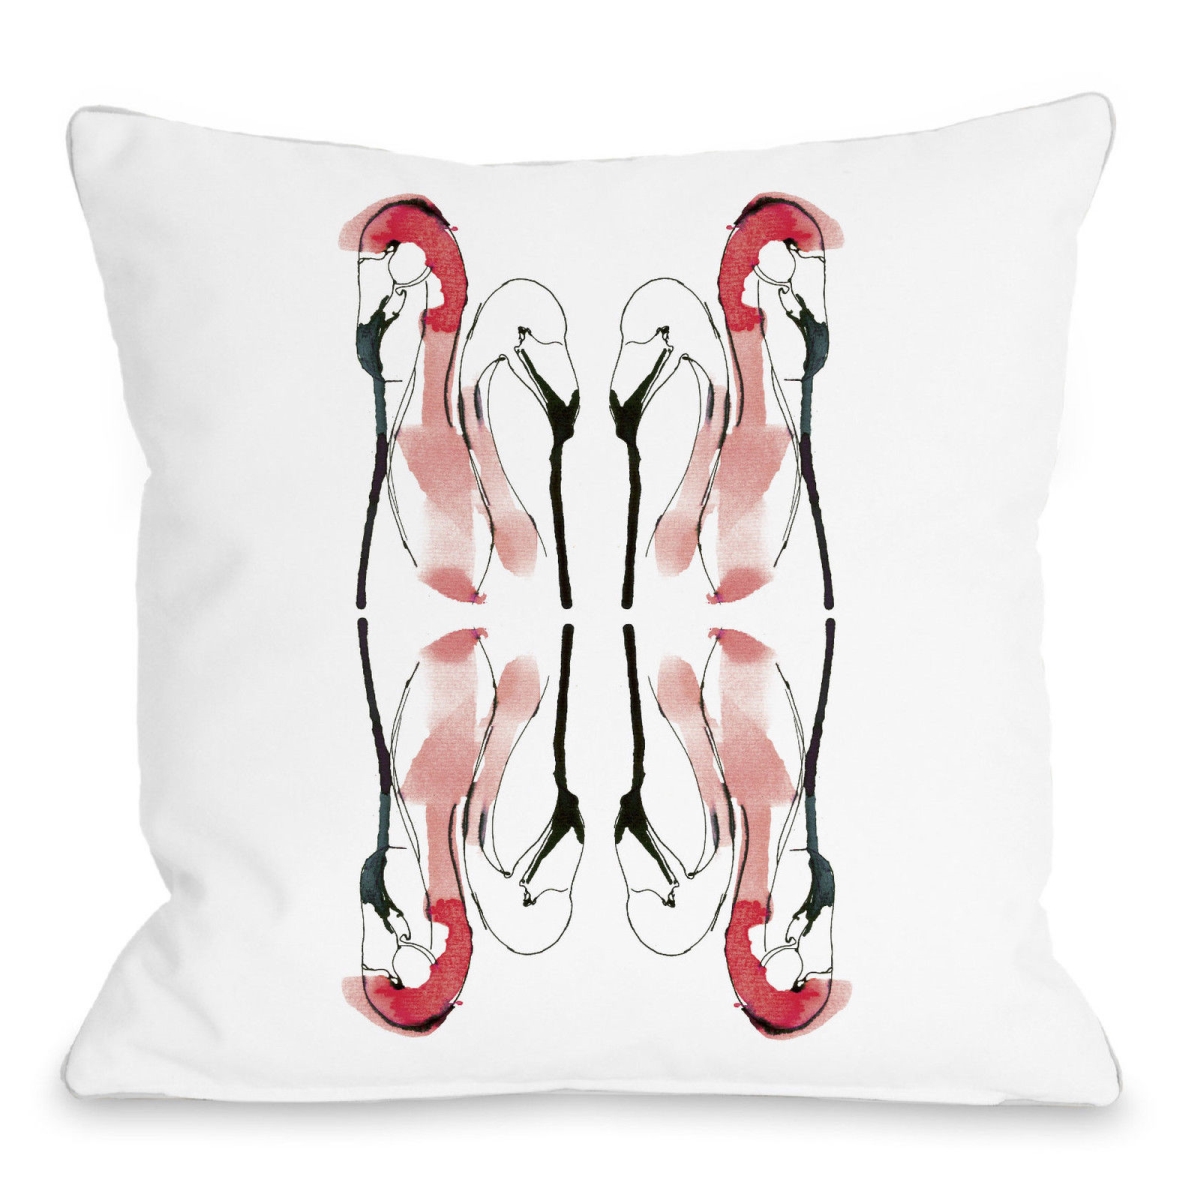 72930pl16 16 X 16 In. Flamingos Pillow By Judit Garcia Talvera, White & Red